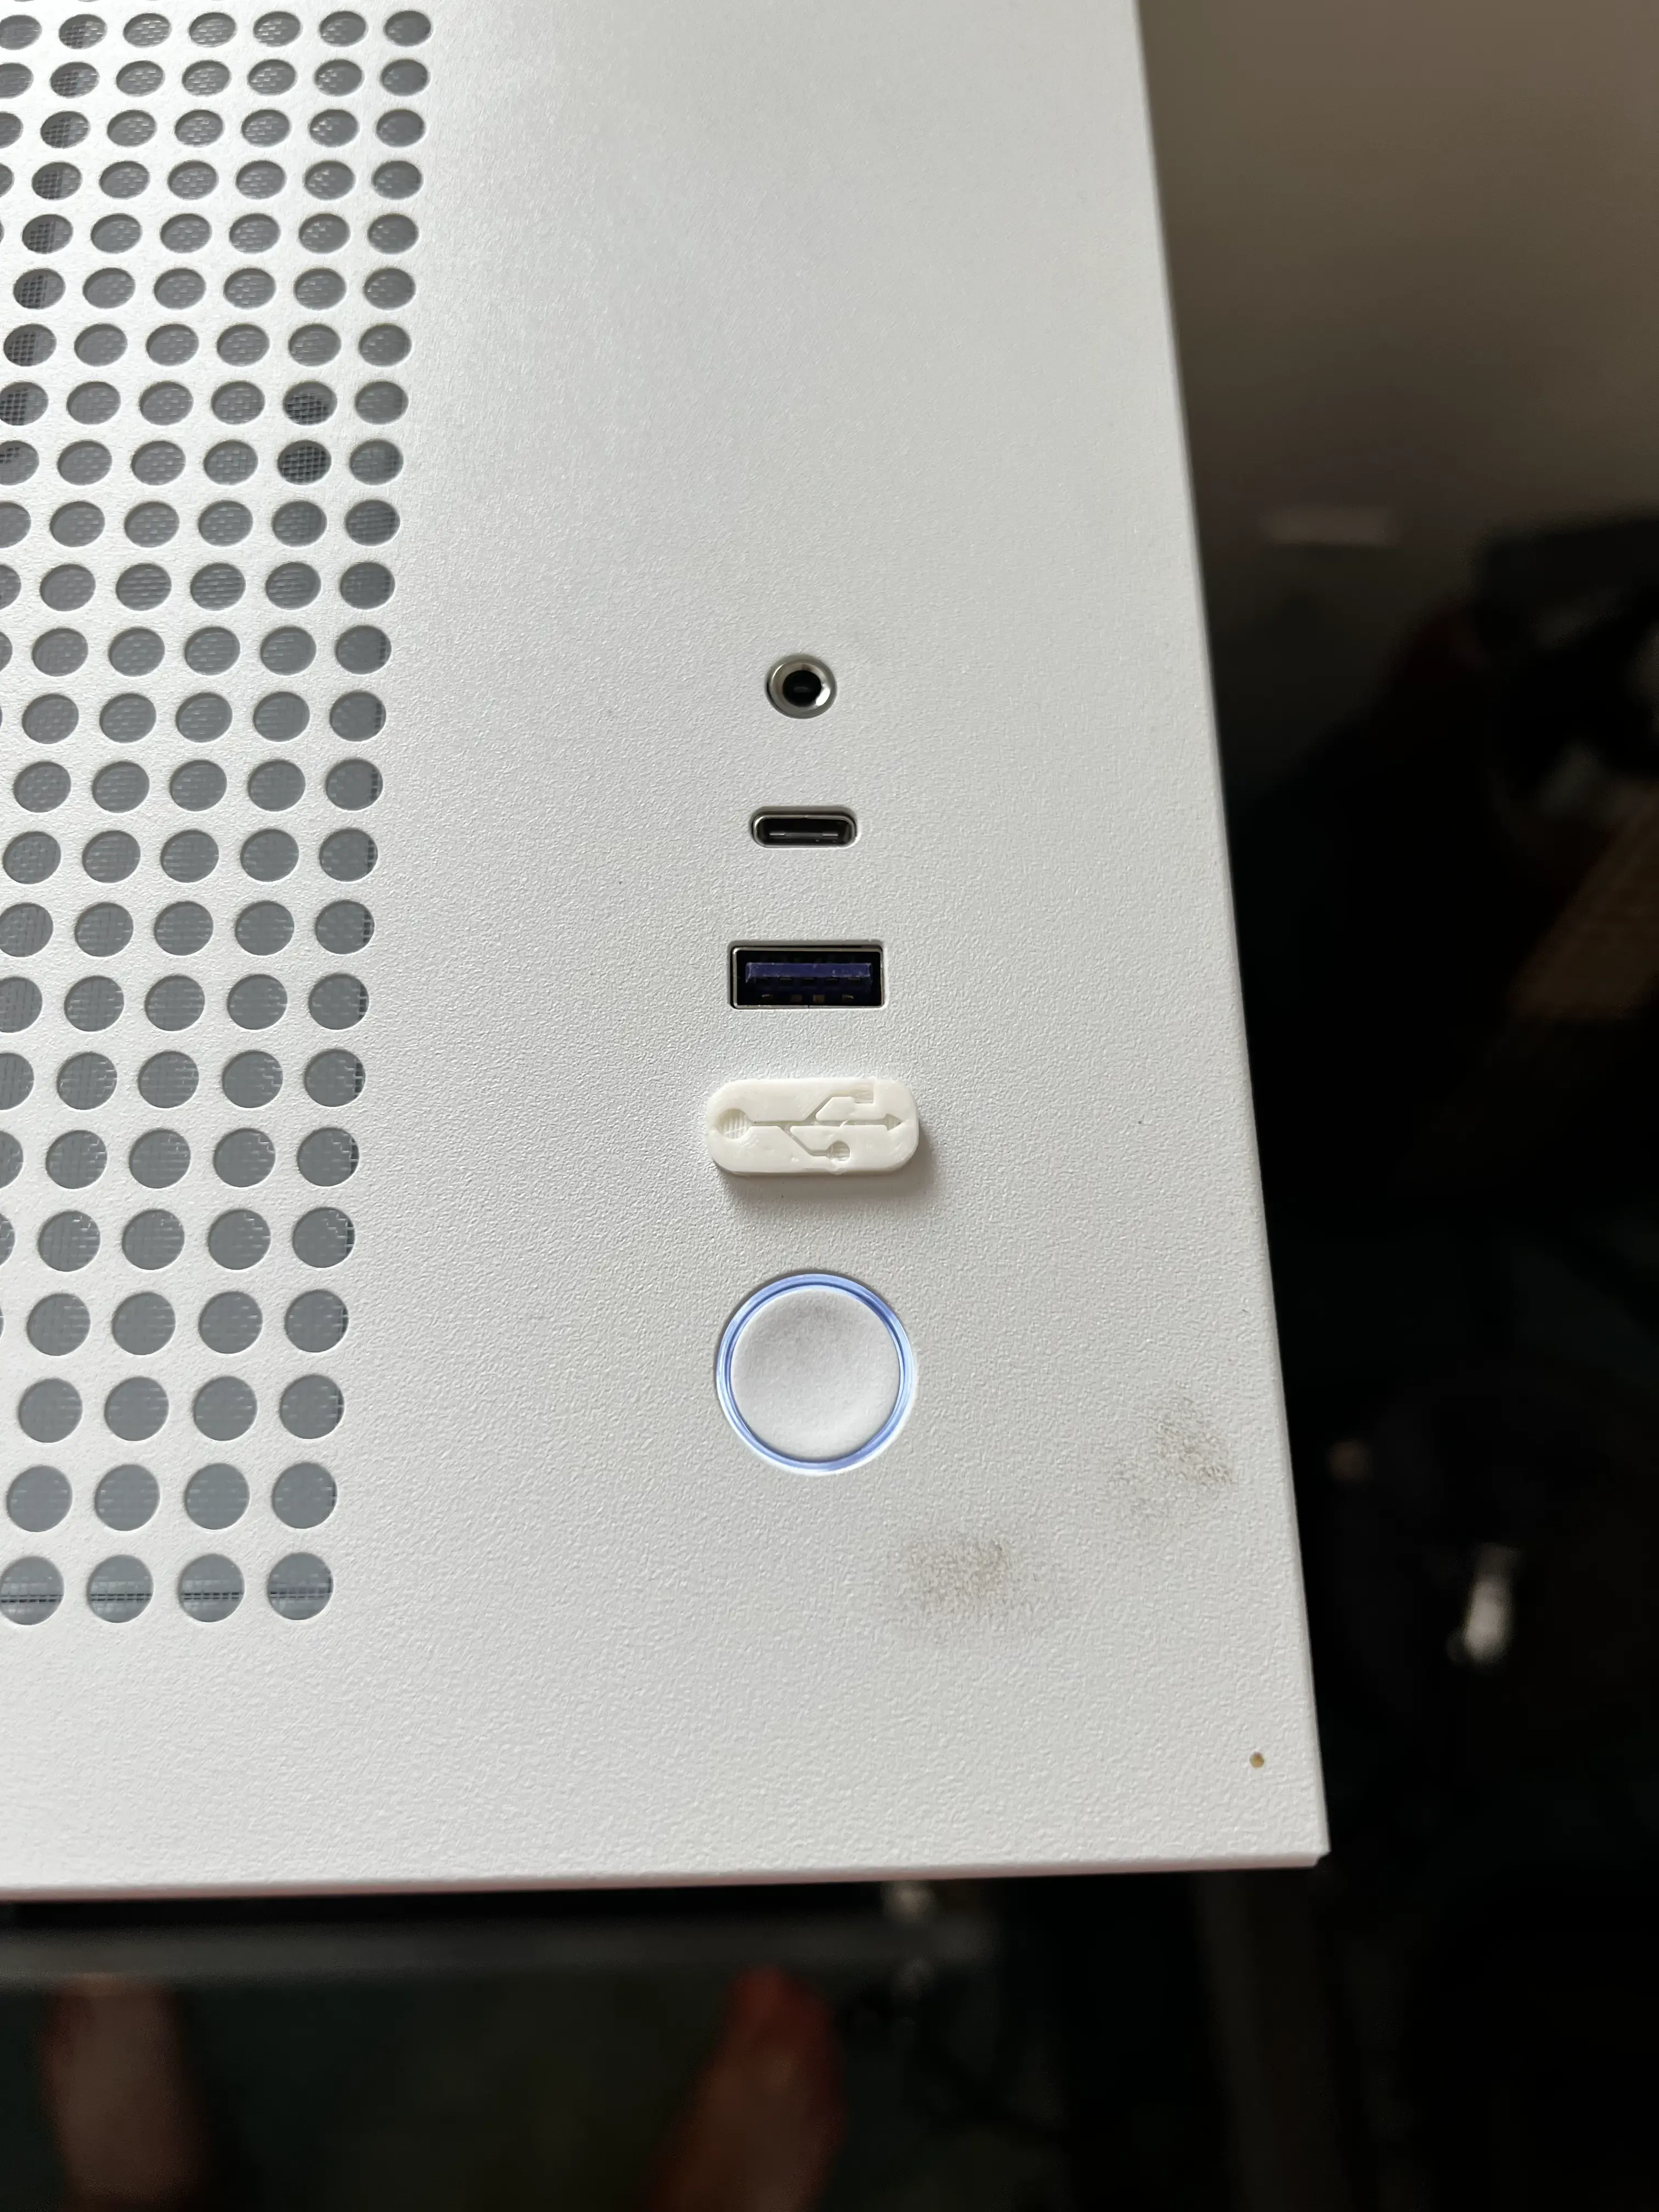 USB Port Dust Cover THIN